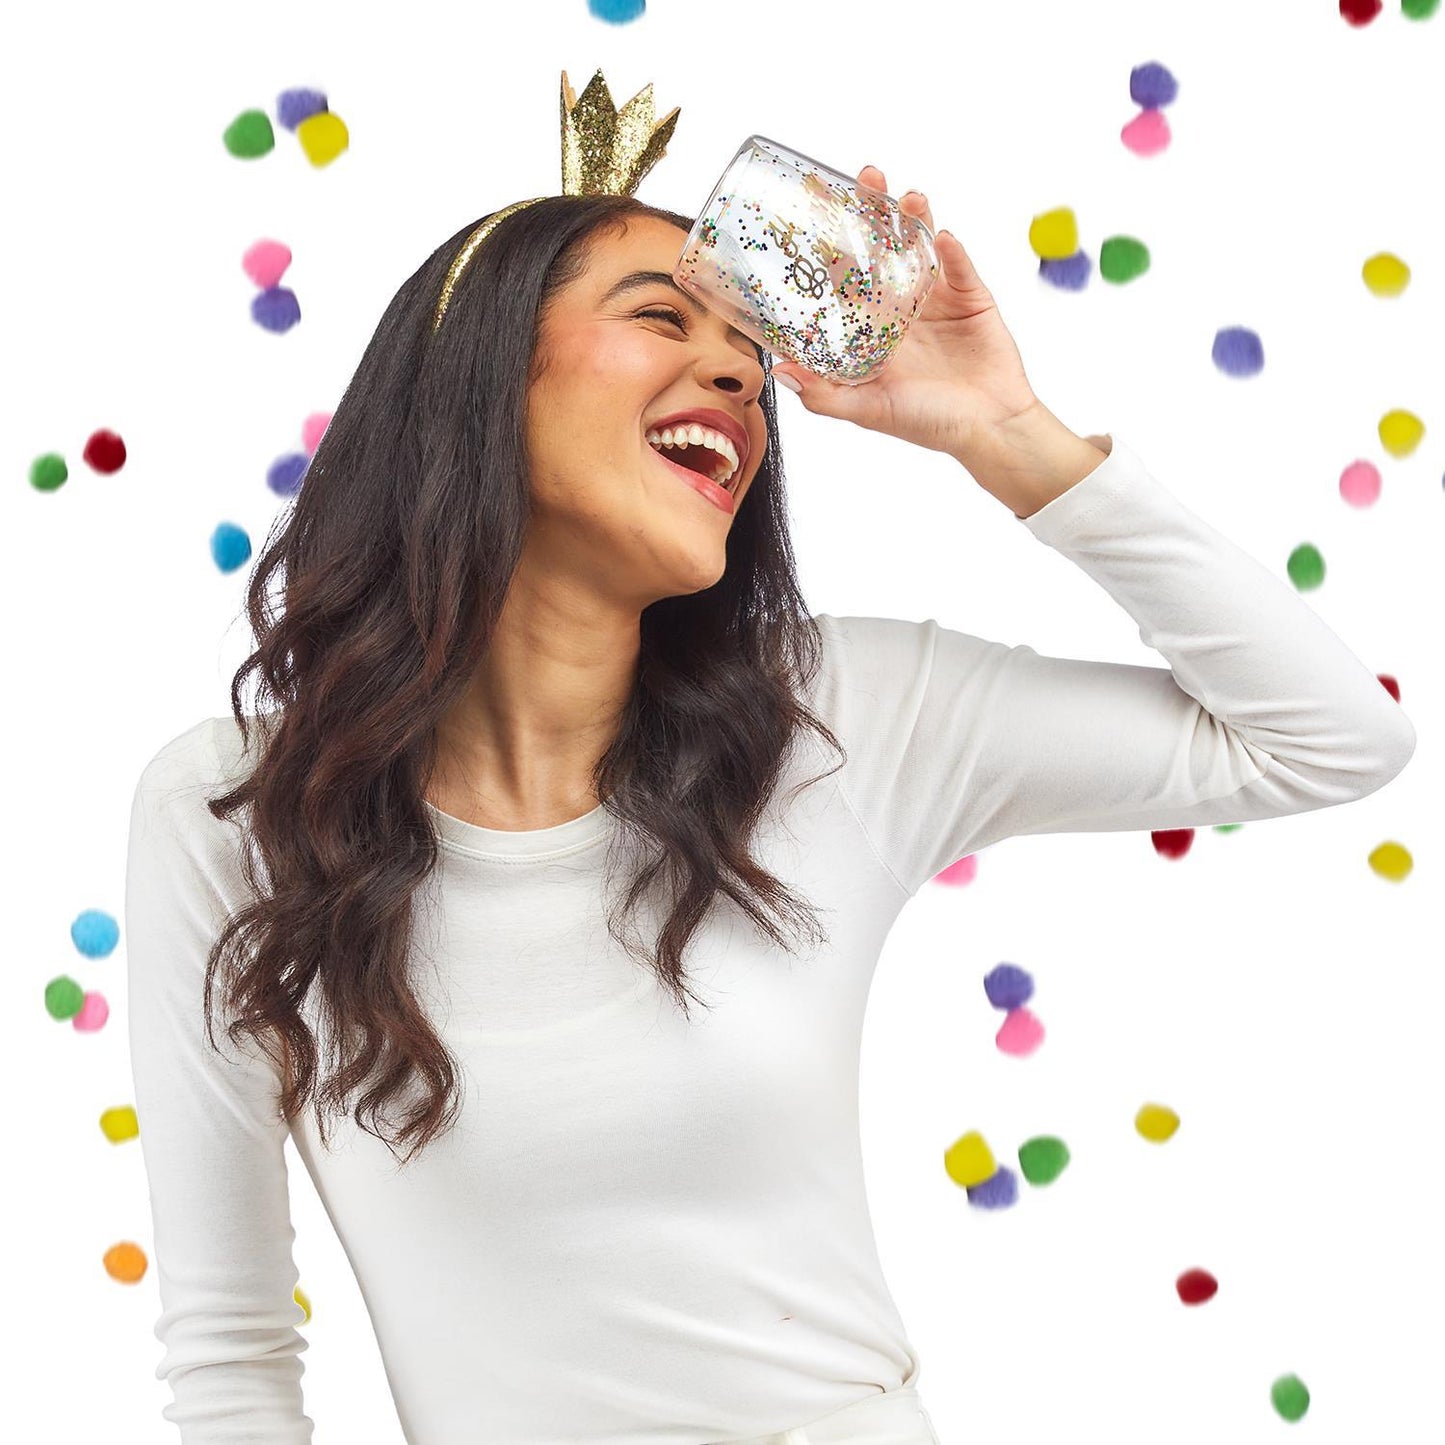 Birthday Queen Stemless Wine Glass and Glitter Crown Headband